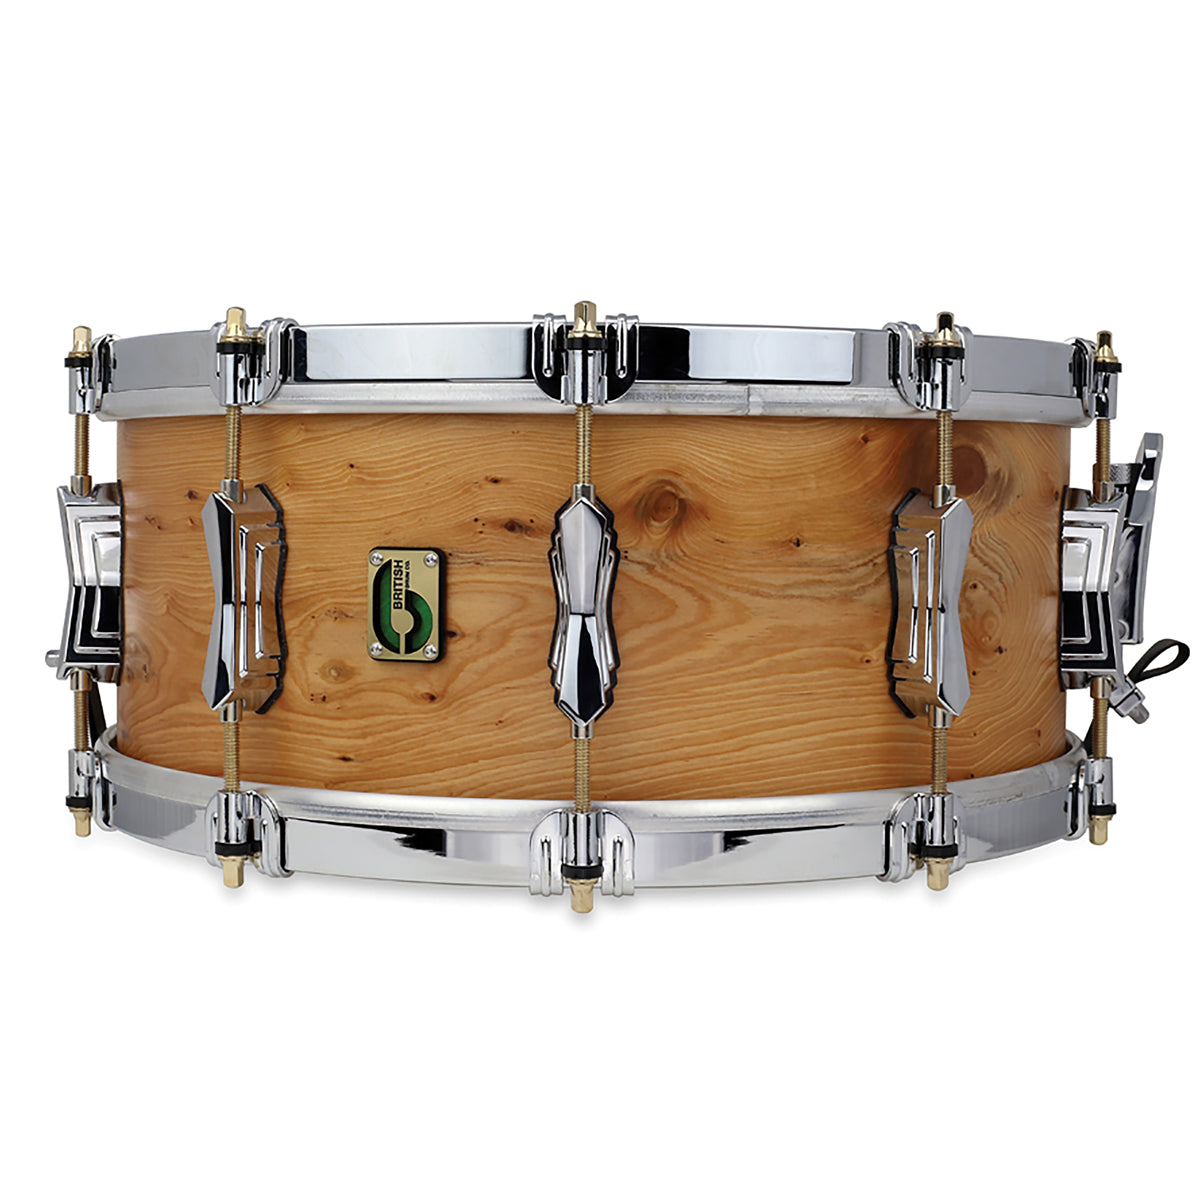 British Drum Company ARC-1460-SN 'The Archer' 14" x 6" English Yew Snare Drum